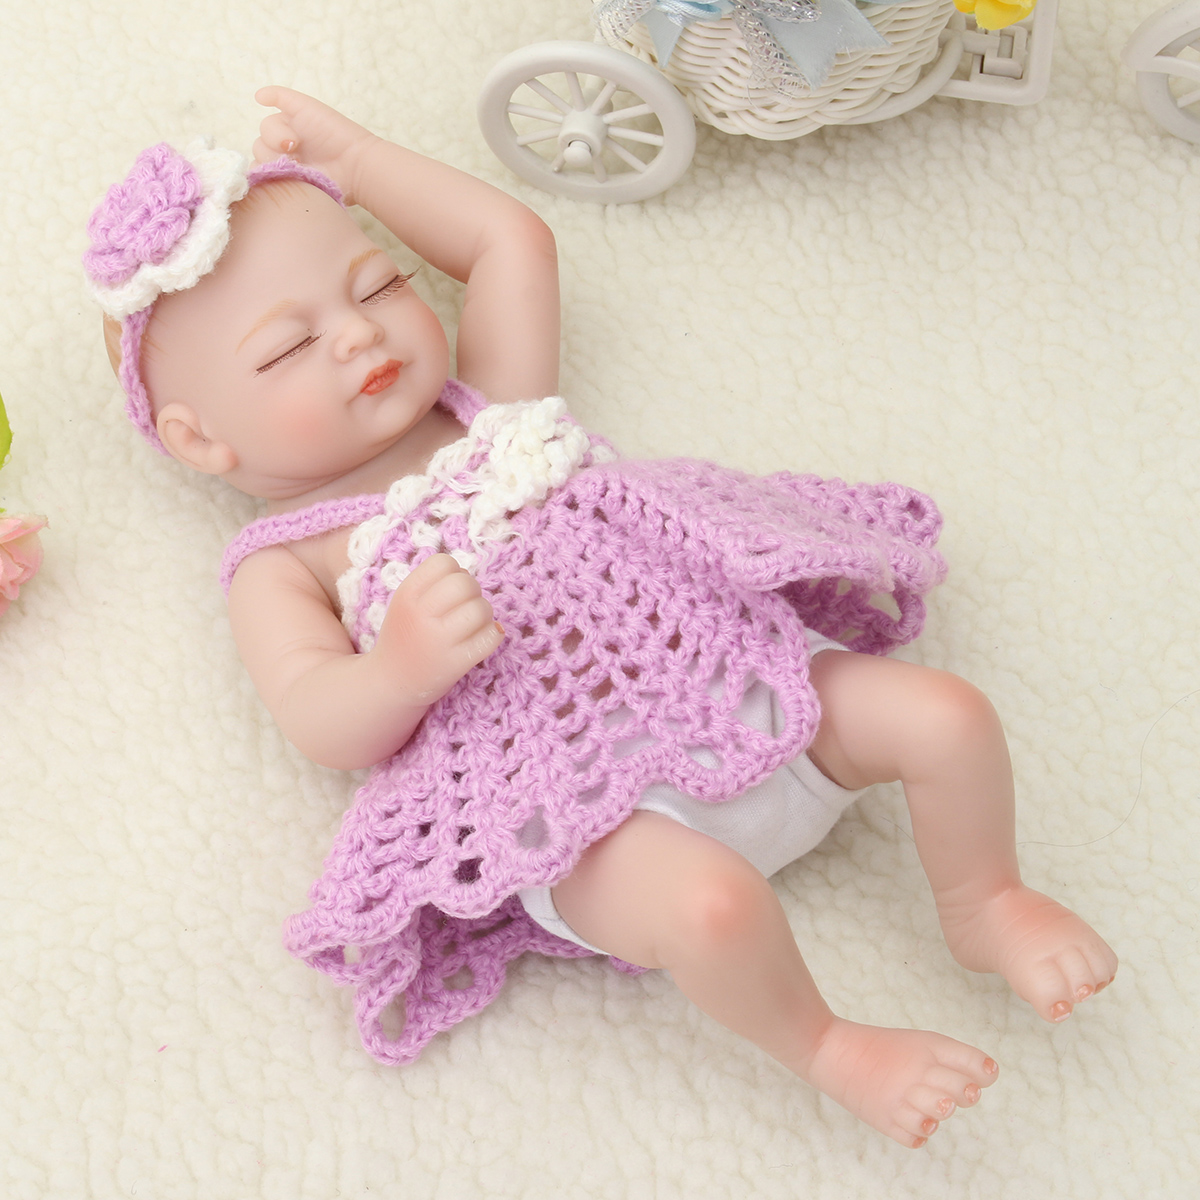 11-Reborn-Doll-Newborn-Handmade-Lifelike-Soft-Silicone-Realistic-Christmas-Gifts-1407013-3